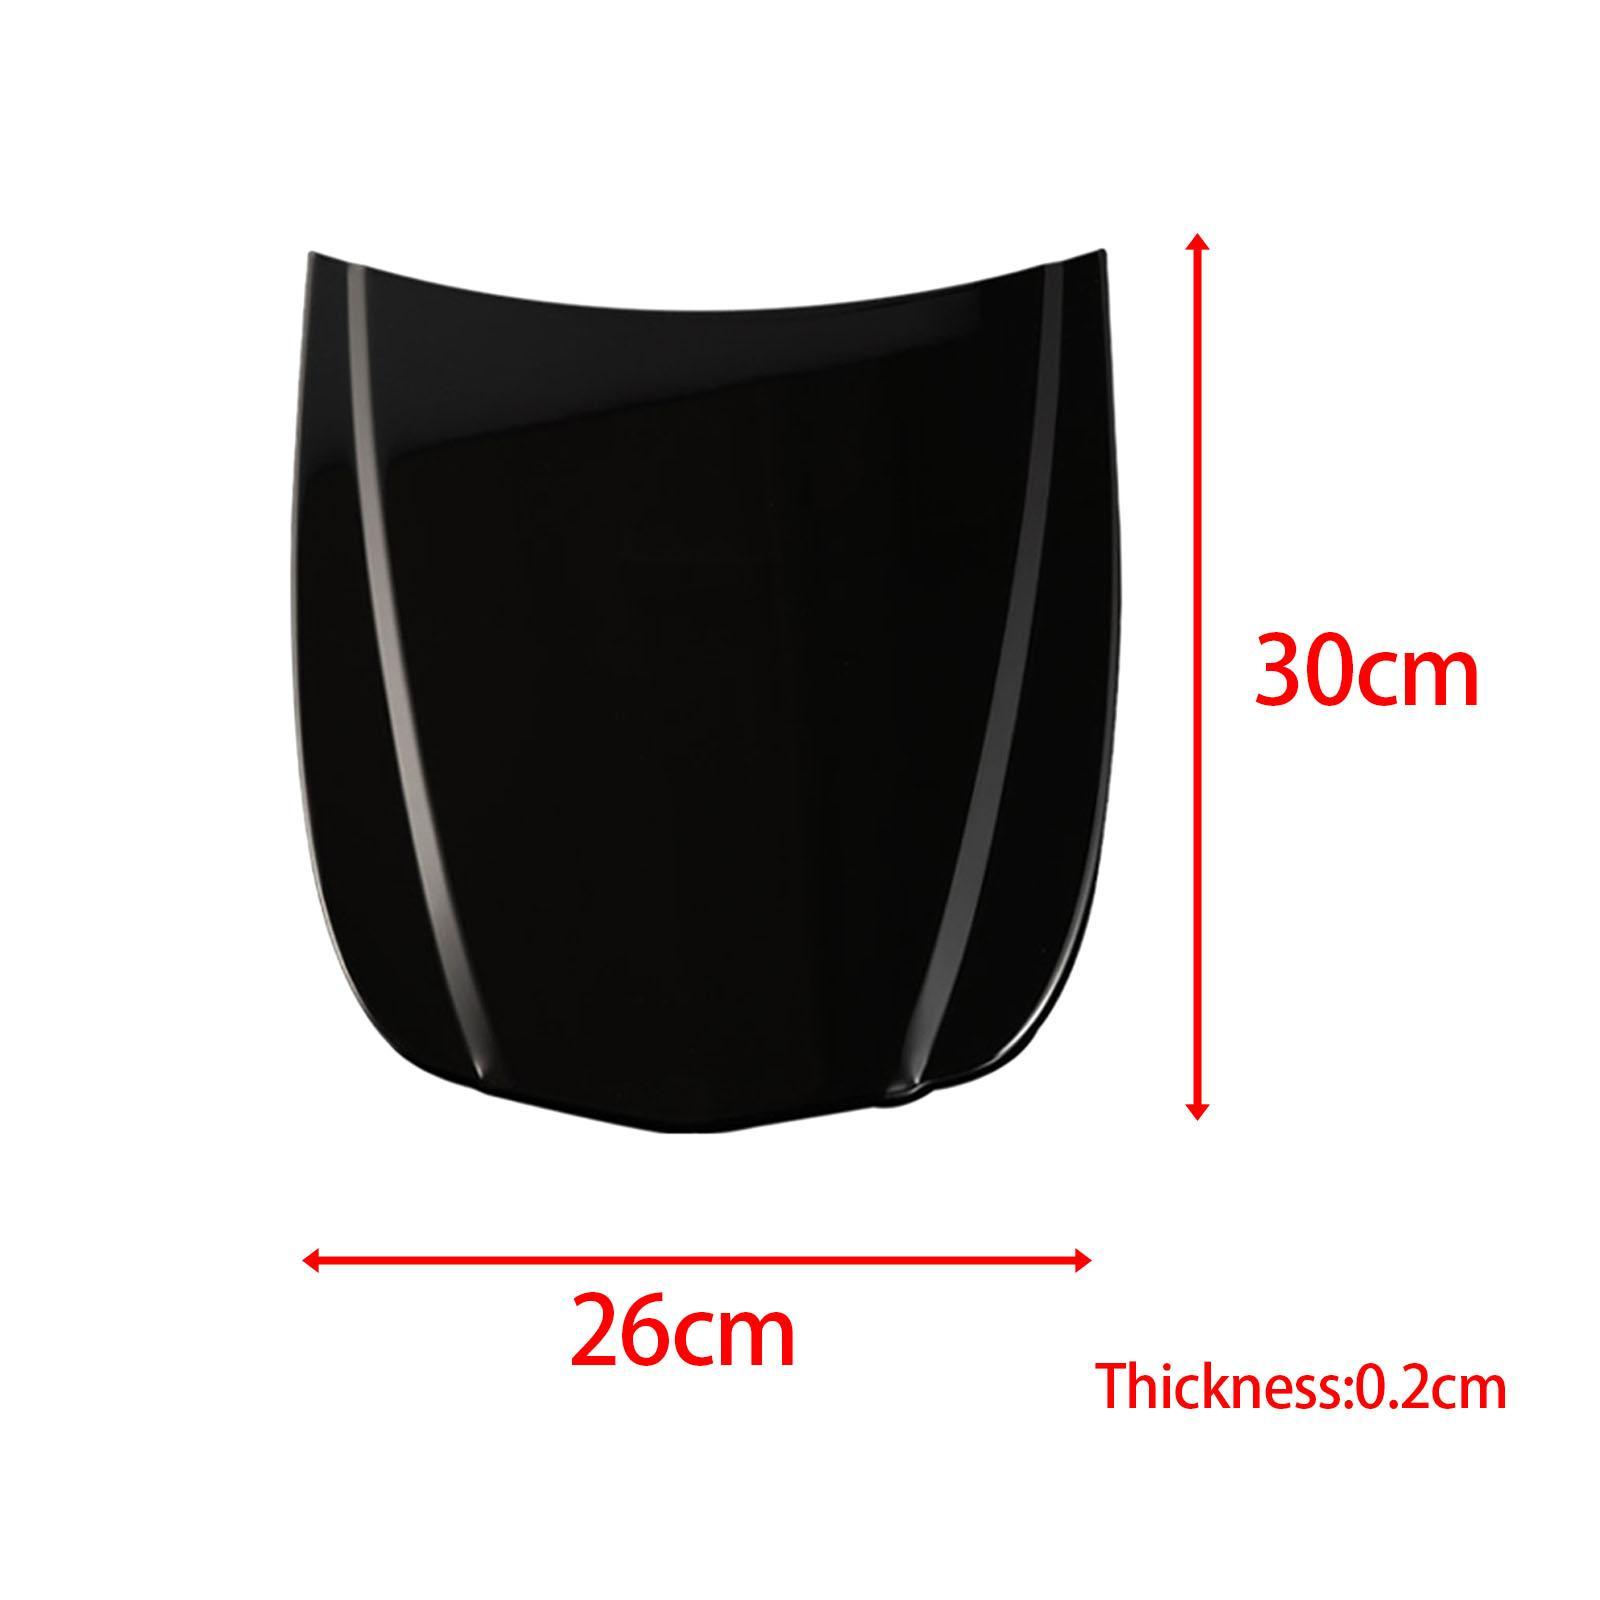 Hình ảnh Car Display Show Model for Windows Tint Painting Wrapping Sturdy Black